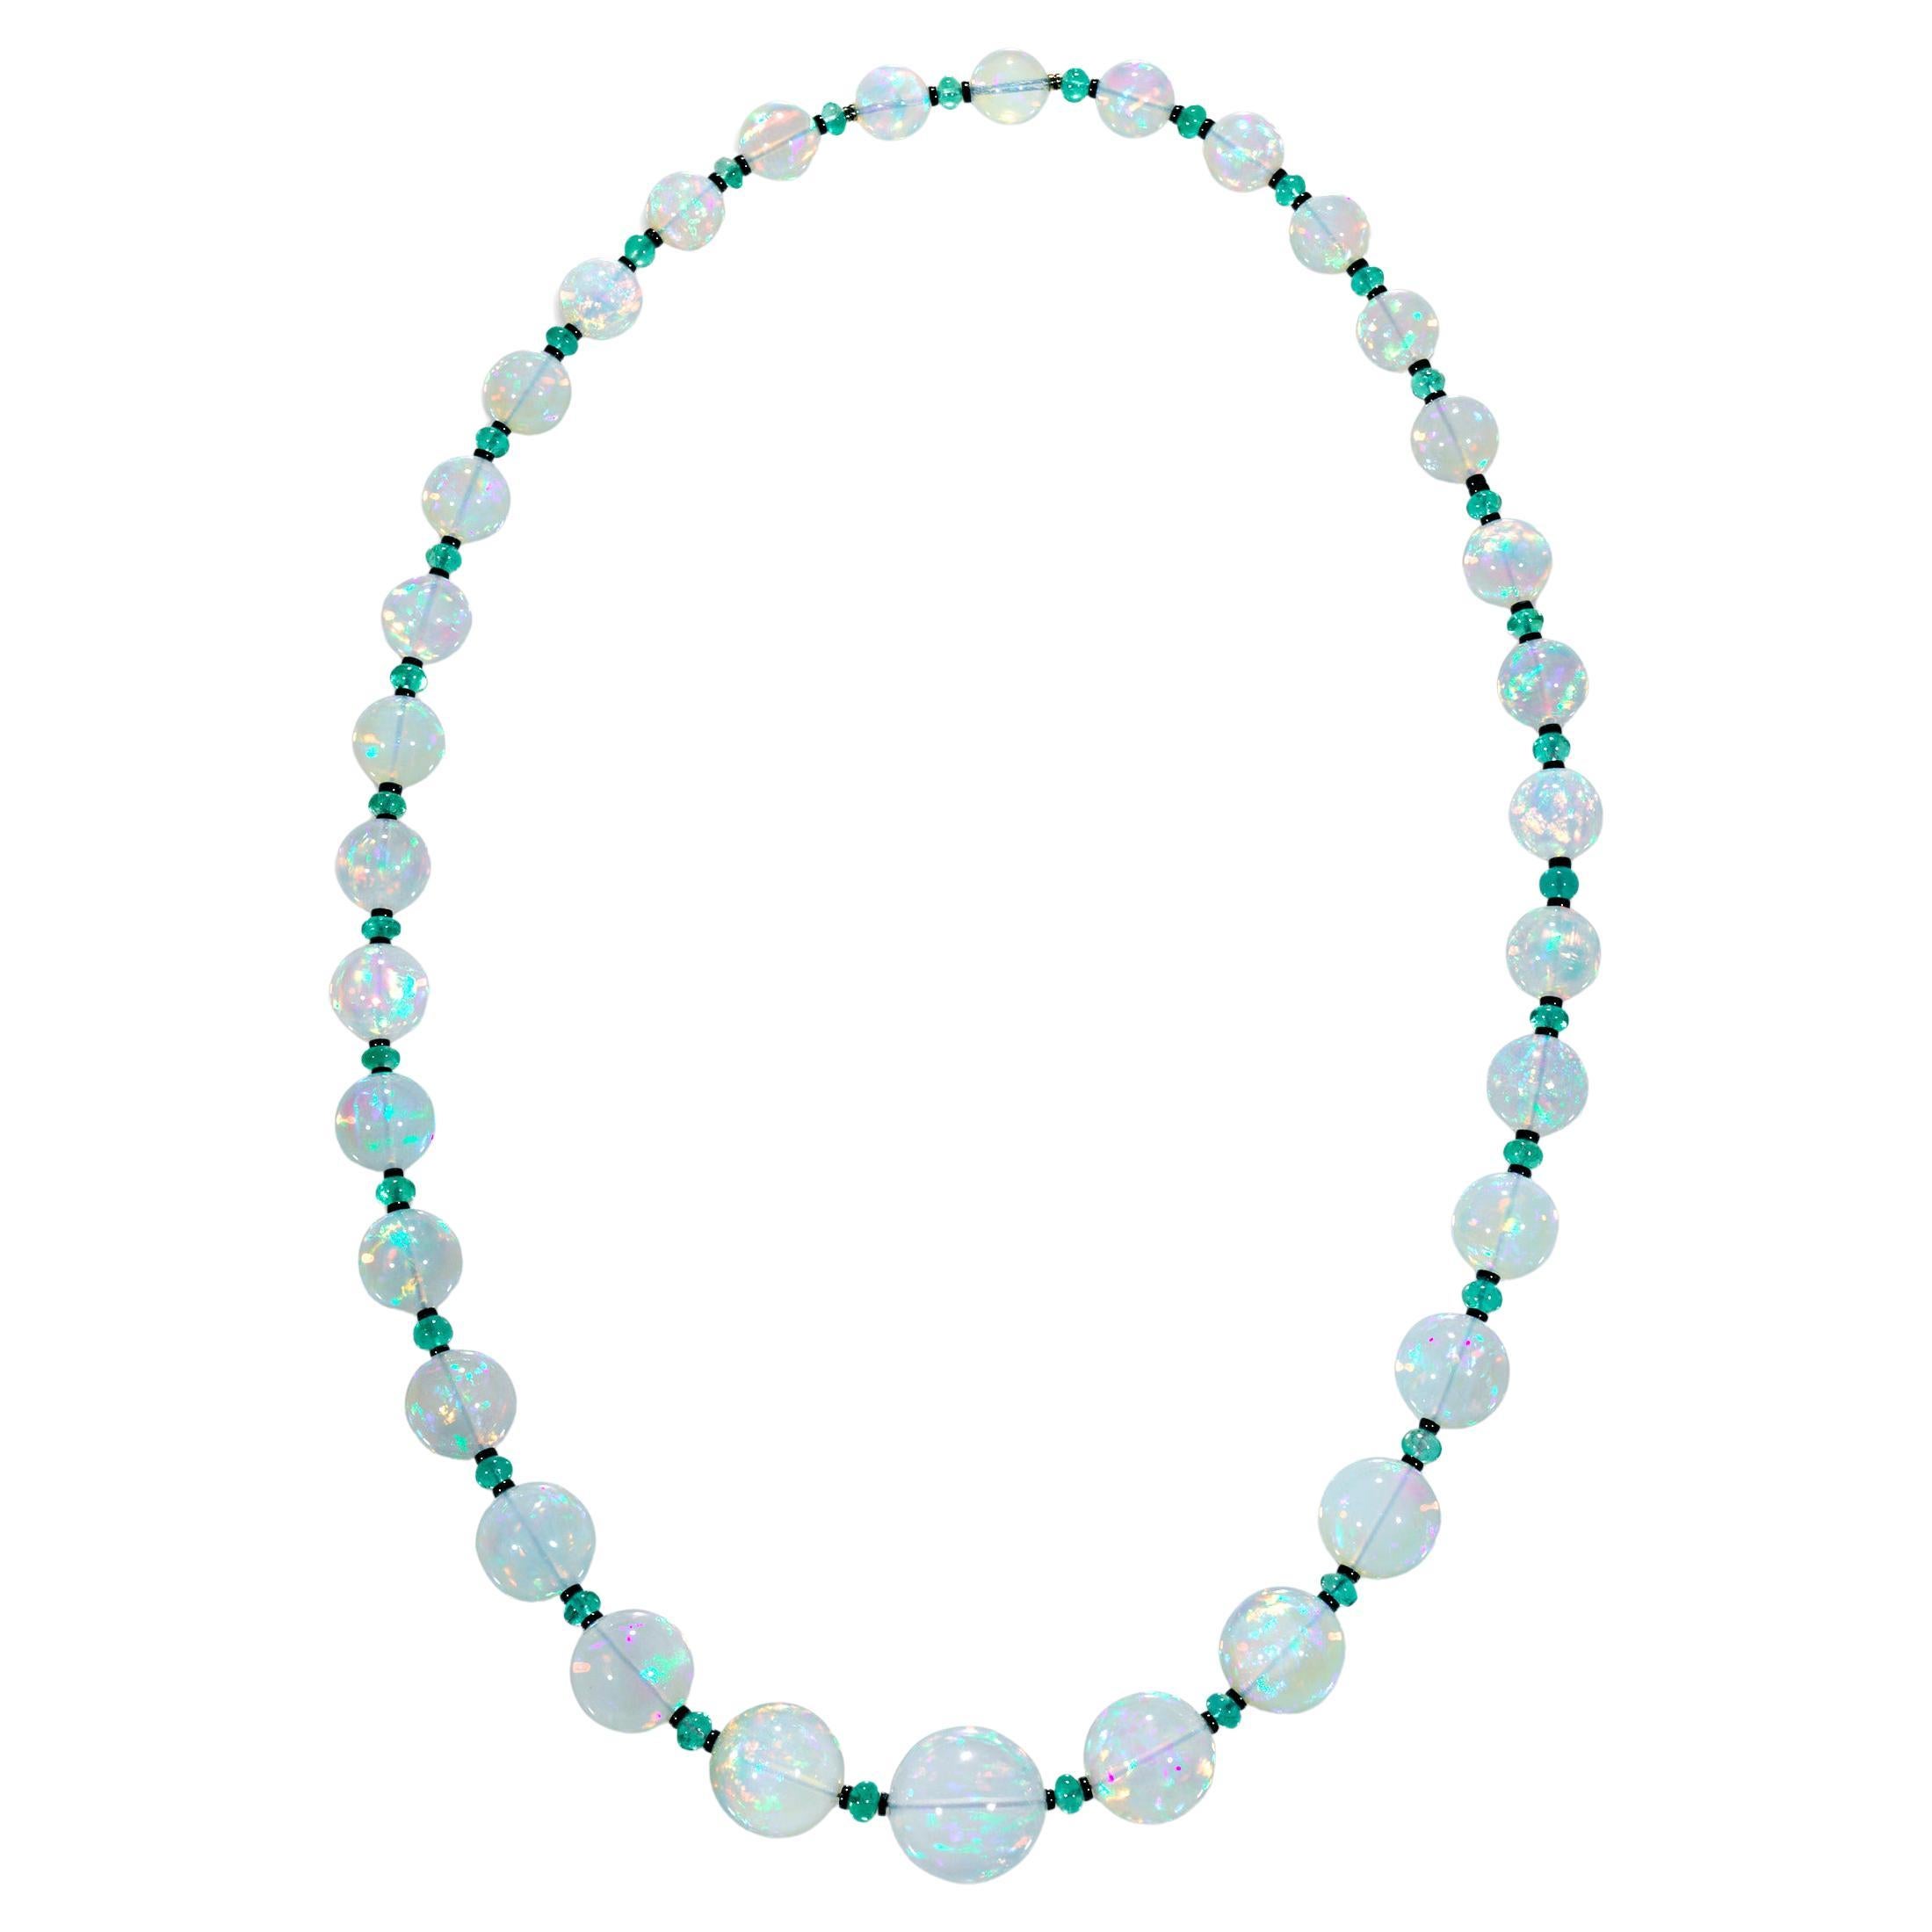 Graduated Ethiopian Opal Necklace, 436.00 Carats For Sale